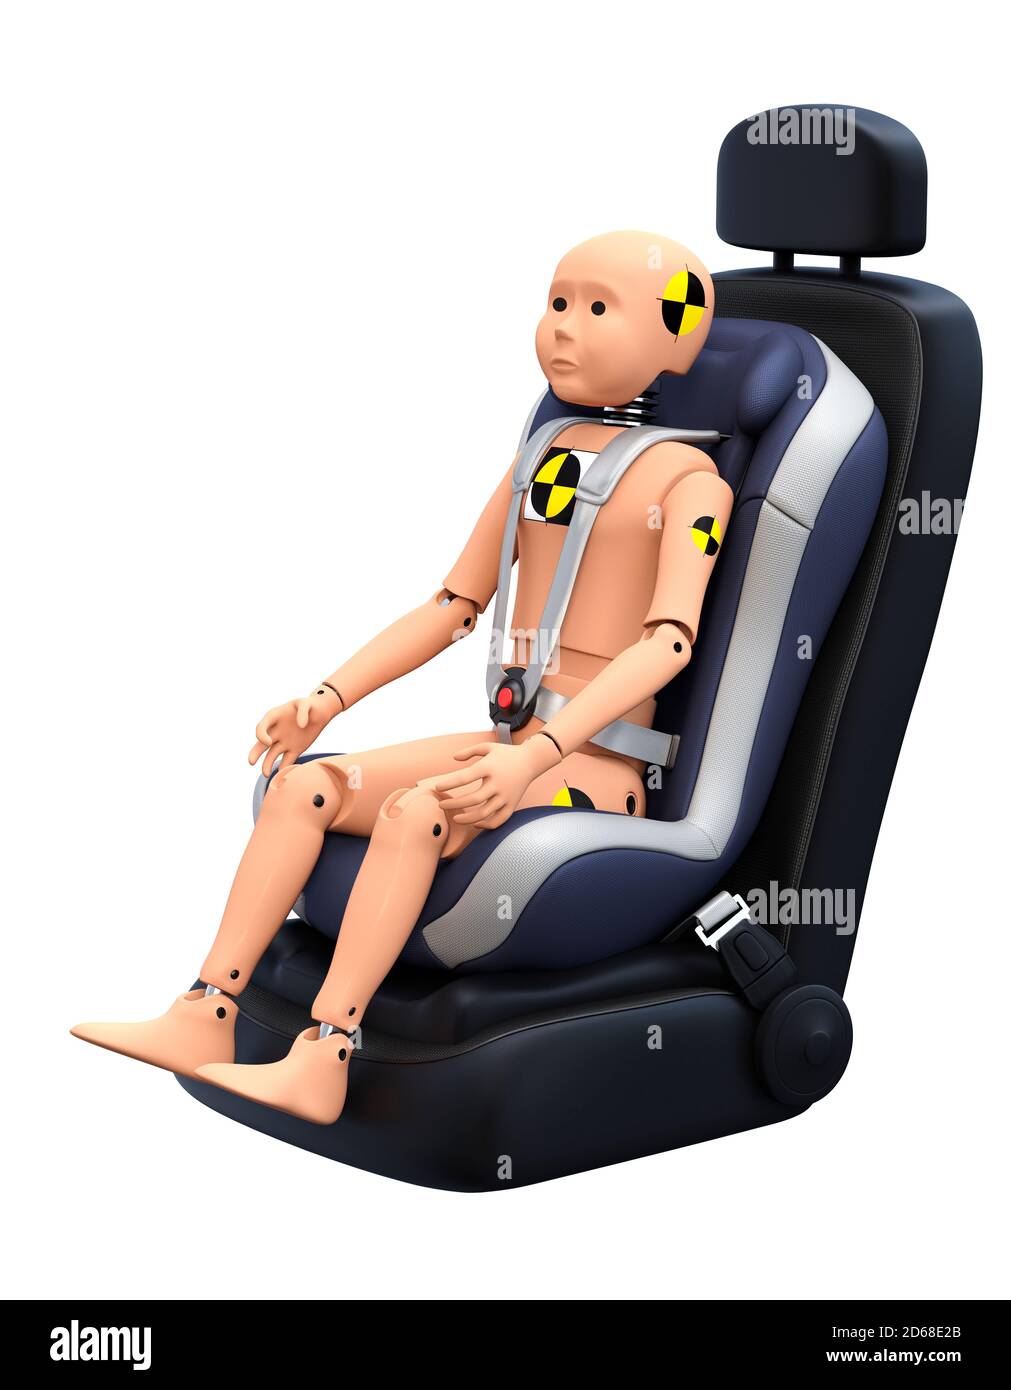 Child Crash Test Dummy in Car Seat. Safety Concept. 3D illustration Stock Photo